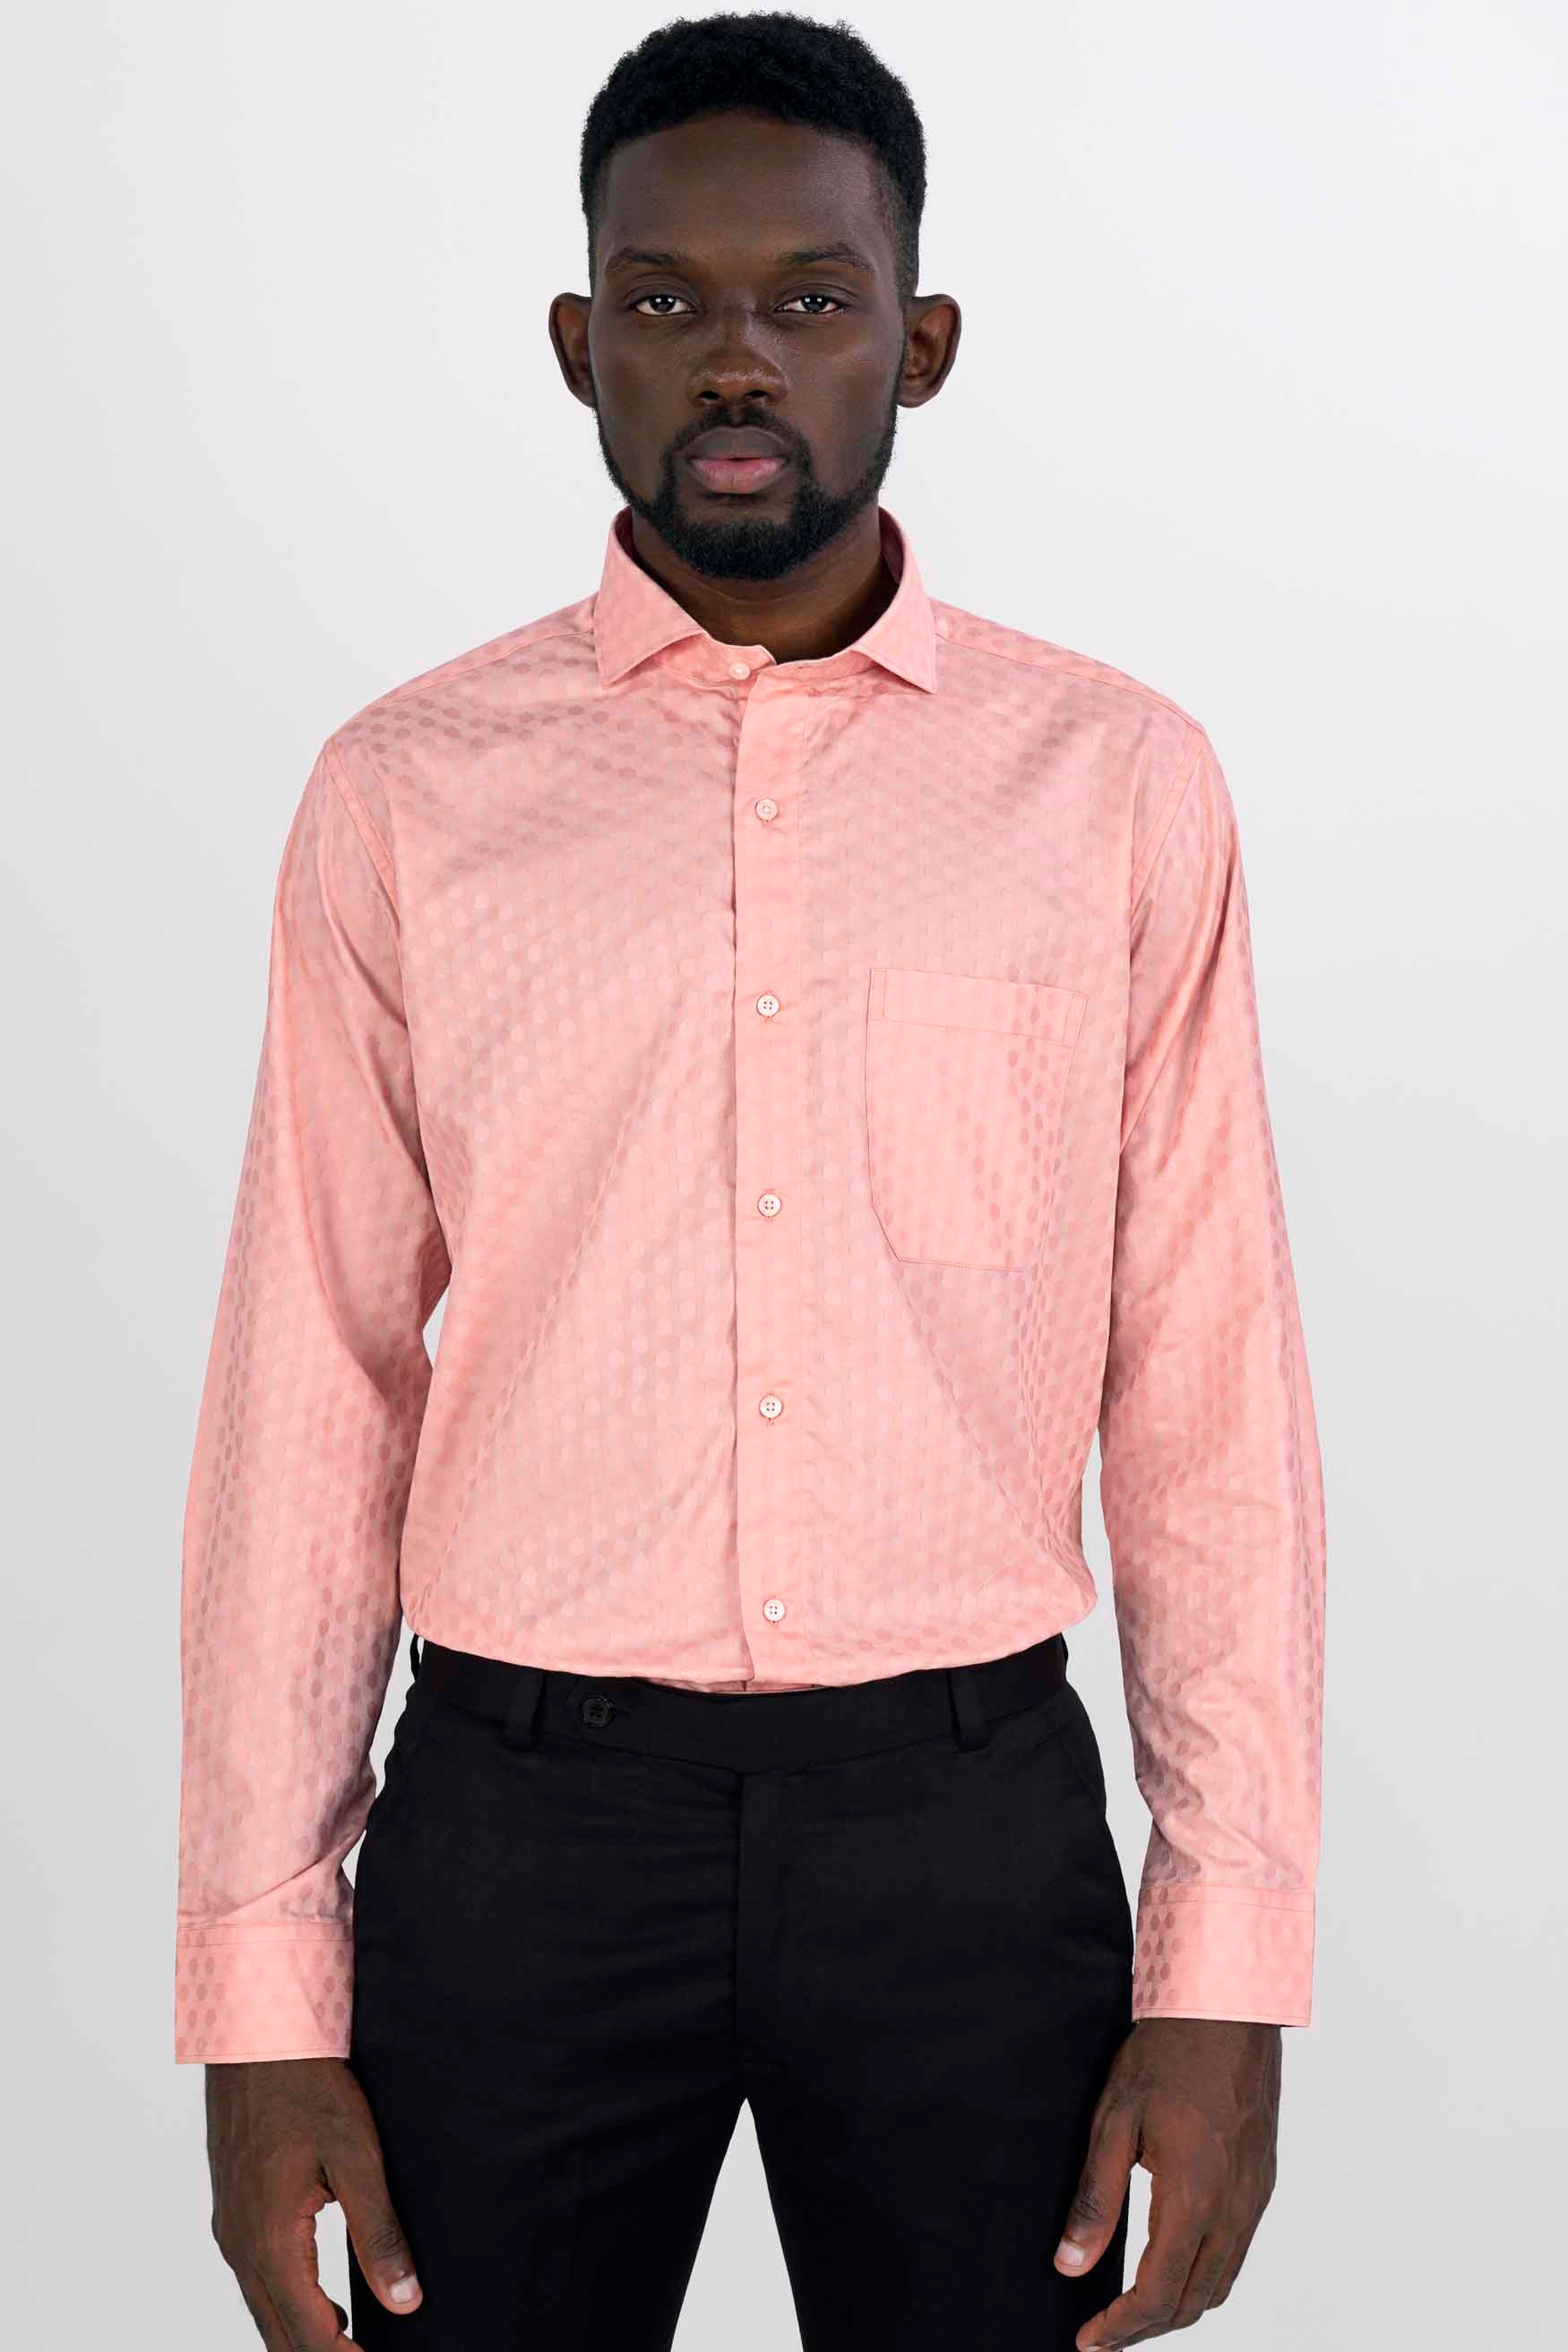 Cosmos Pink and Cashmere Brown Hexagonal Jacquard Textured Premium Giza Cotton Shirt